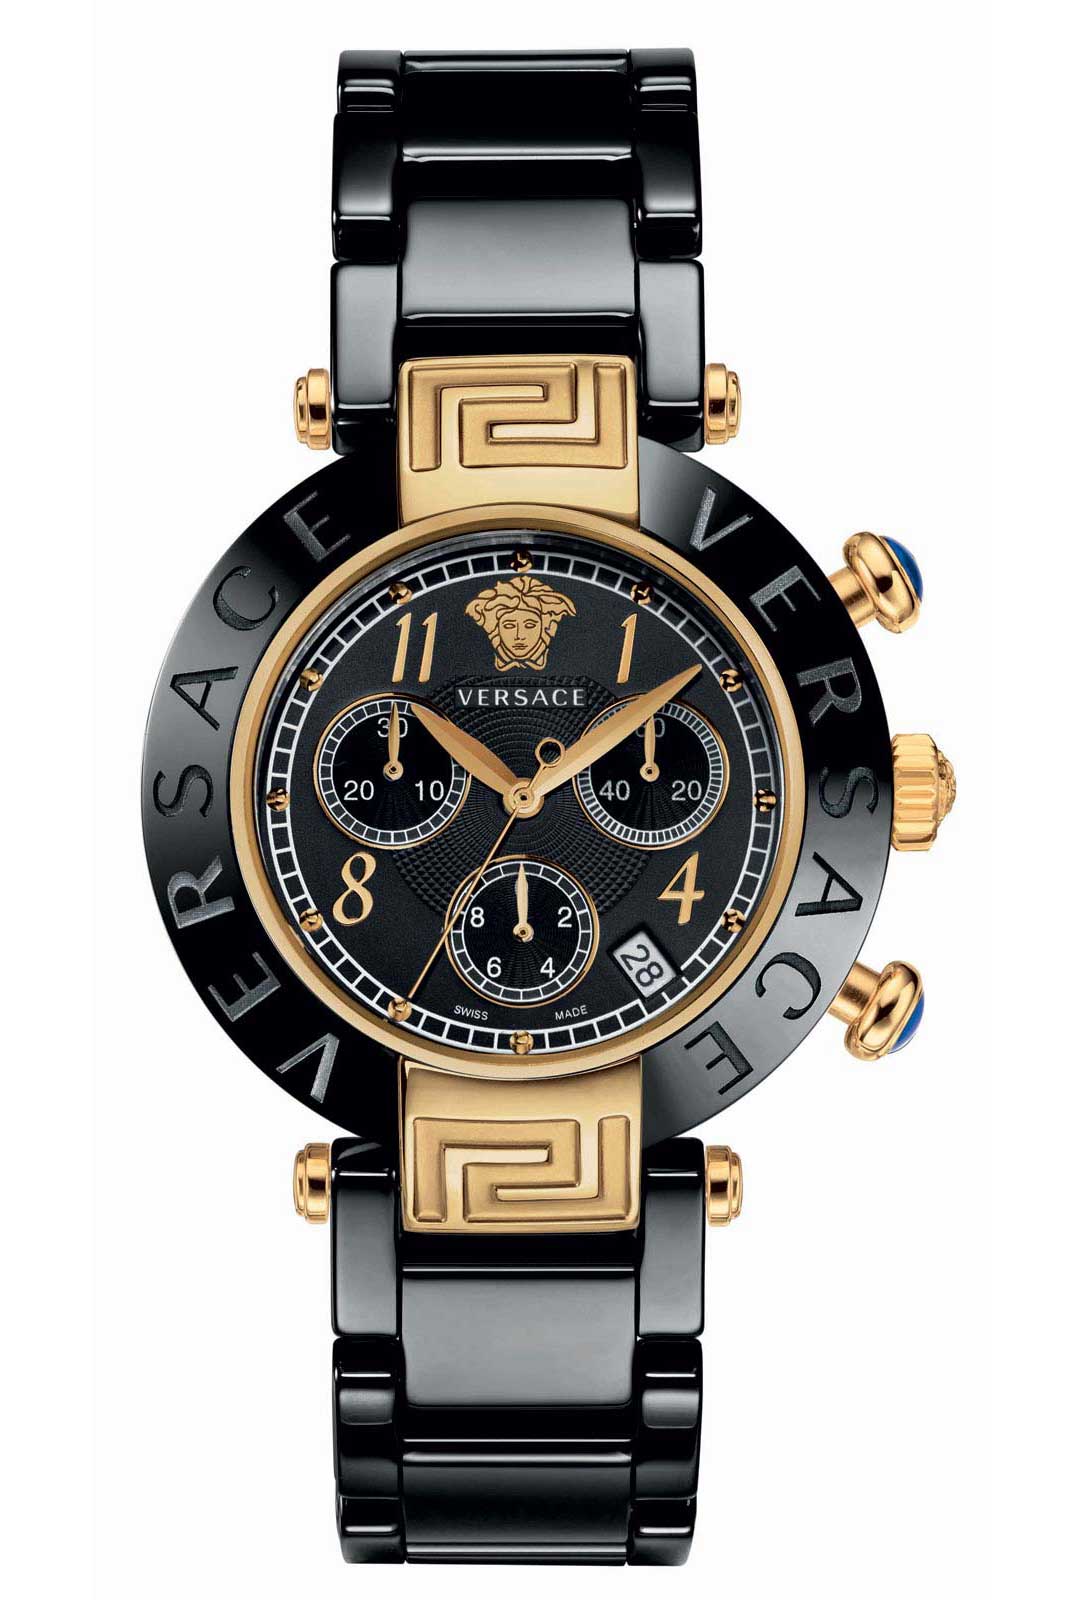 Versace QUARTZ CHRONO watch 5040D STEEL GOLD - Click Image to Close